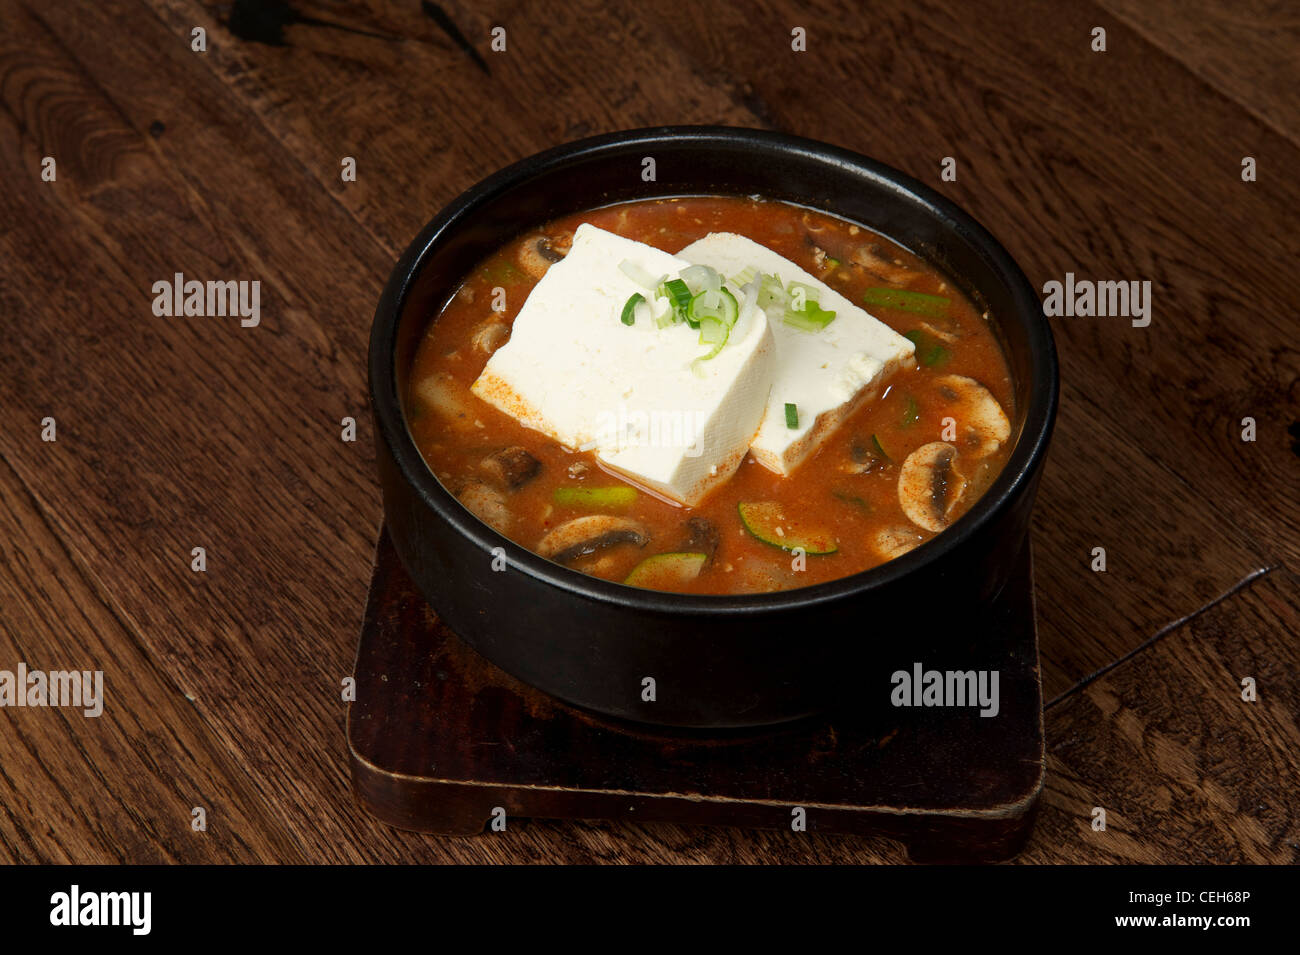 Korean Soup with tofu and mushrooms Stock Photo